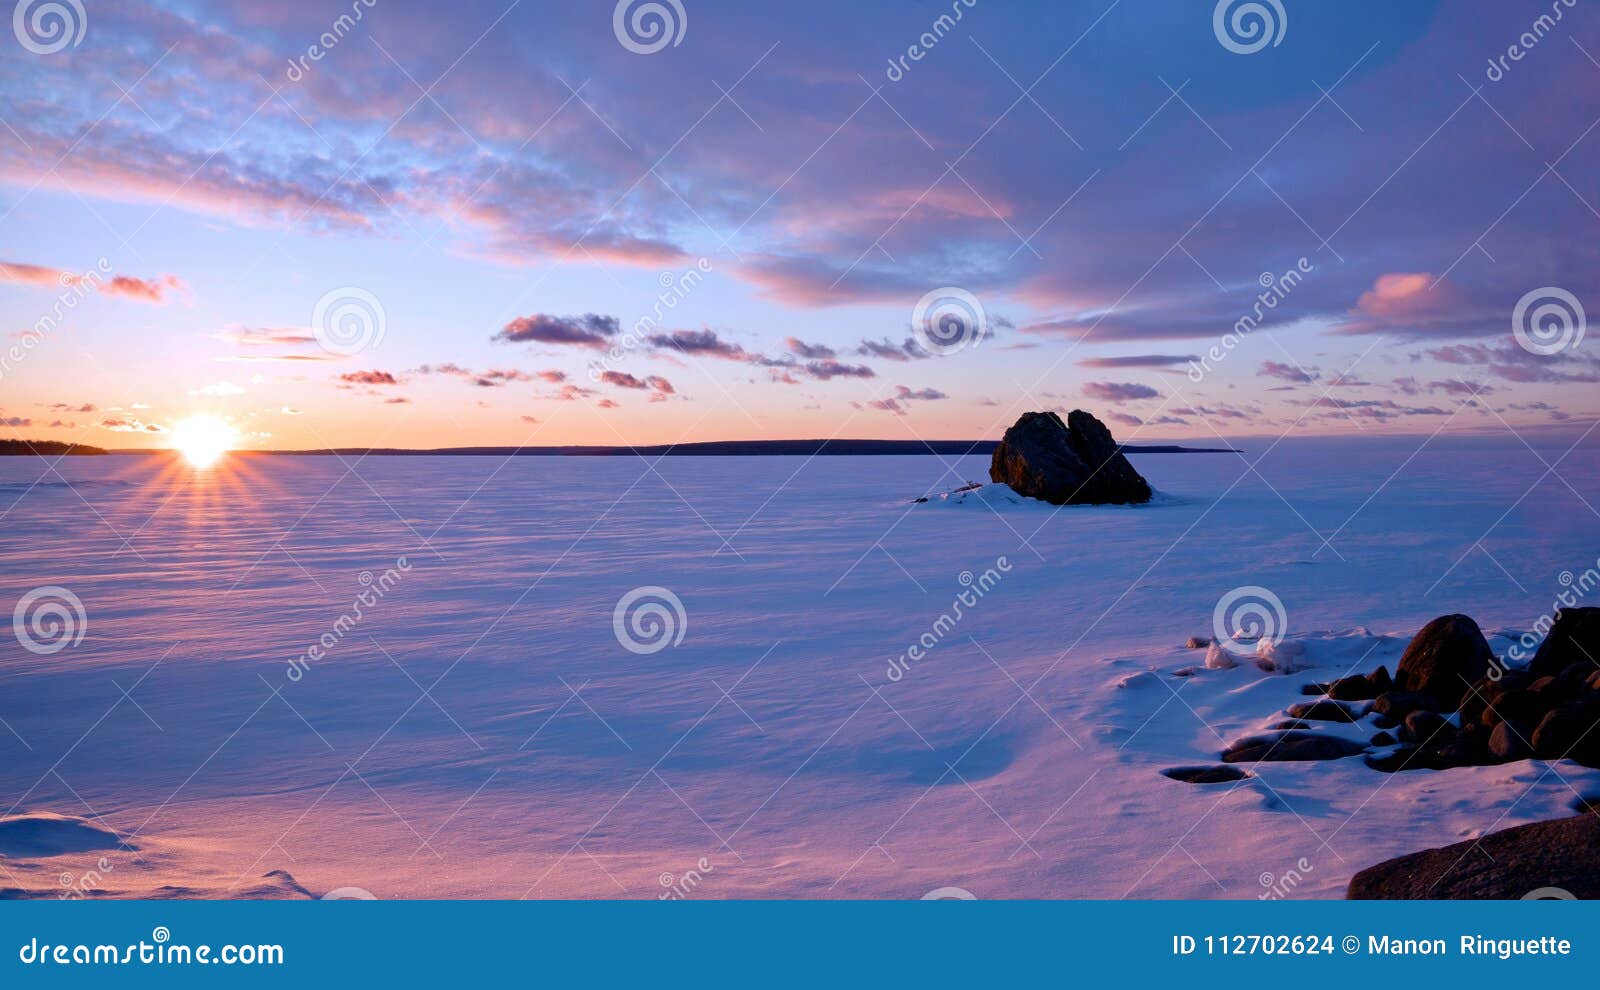 christian island sunset - georgian bay in winter